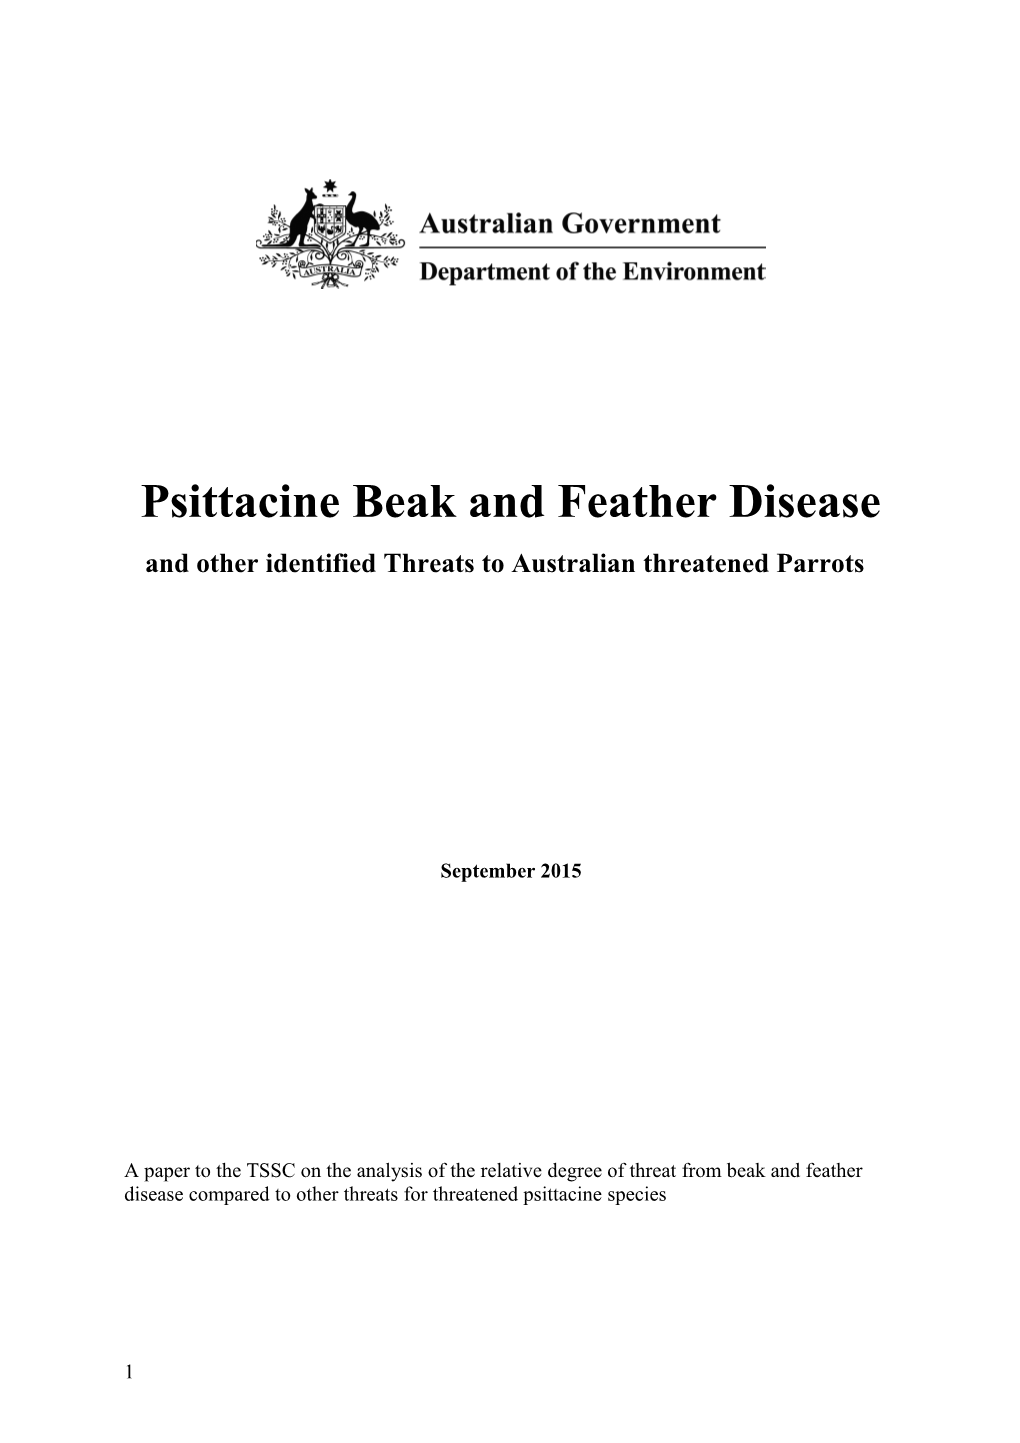 Psittacine Beak and Feather Disease and Other Identified Threats to Australian Threatened